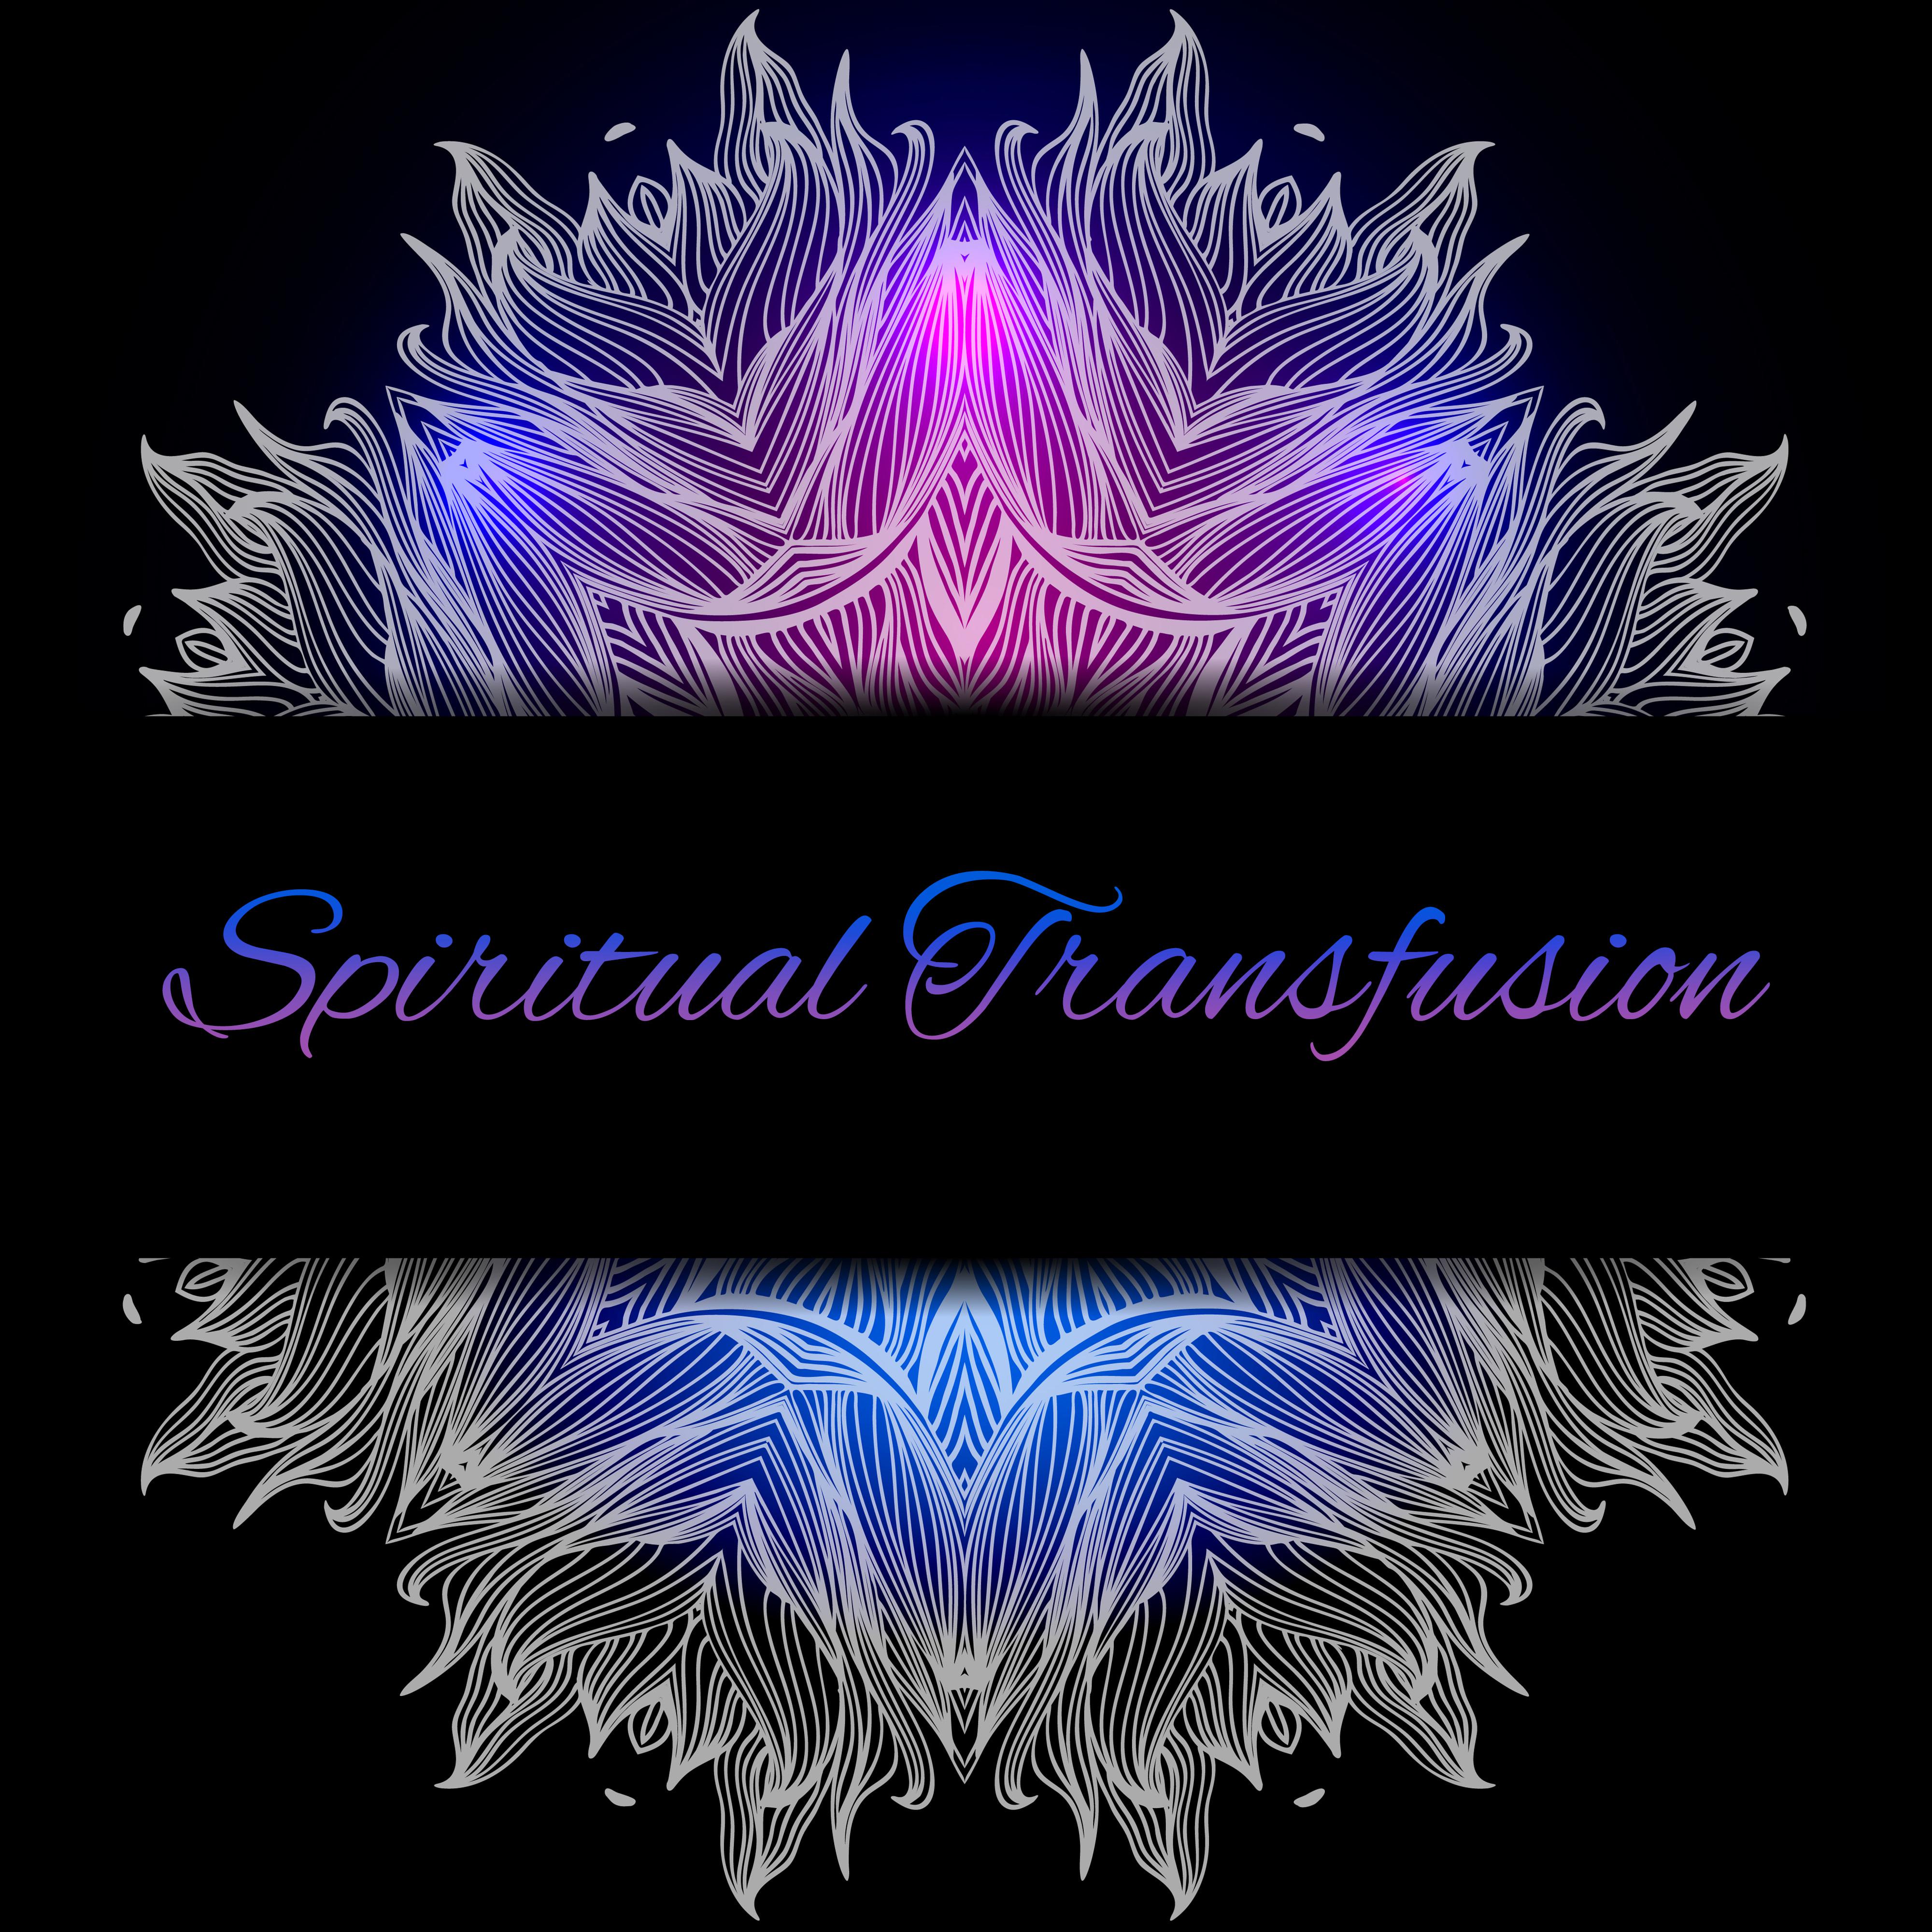 Spiritual Transfusion